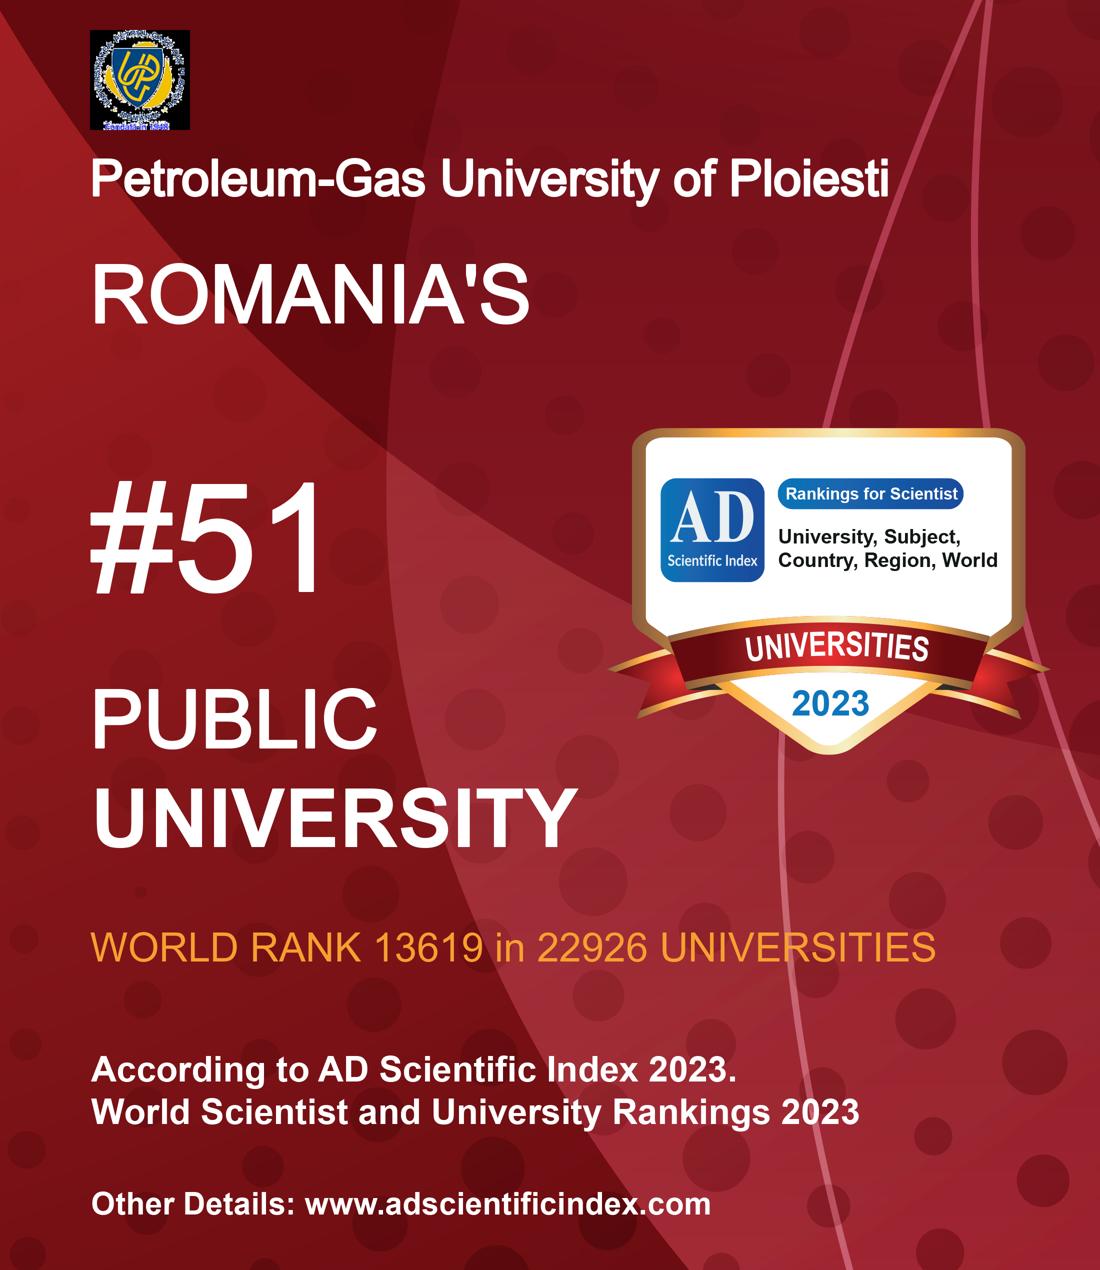 Petroleum-Gas University of Ploiesti